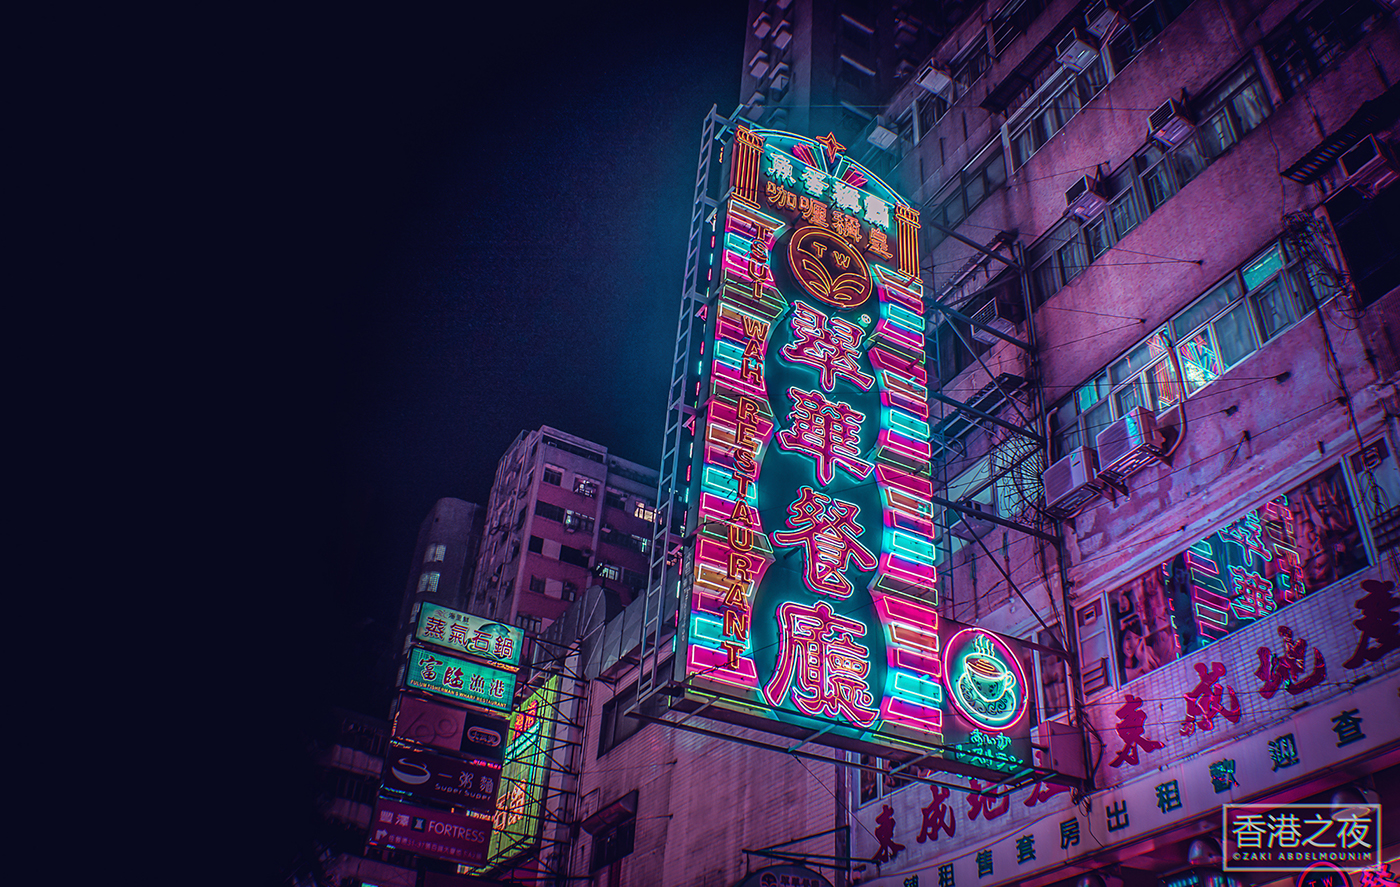 Neo-Noire vaporwave Cyberpunk futuristic Urban Street Photography  night neon Hong Kong